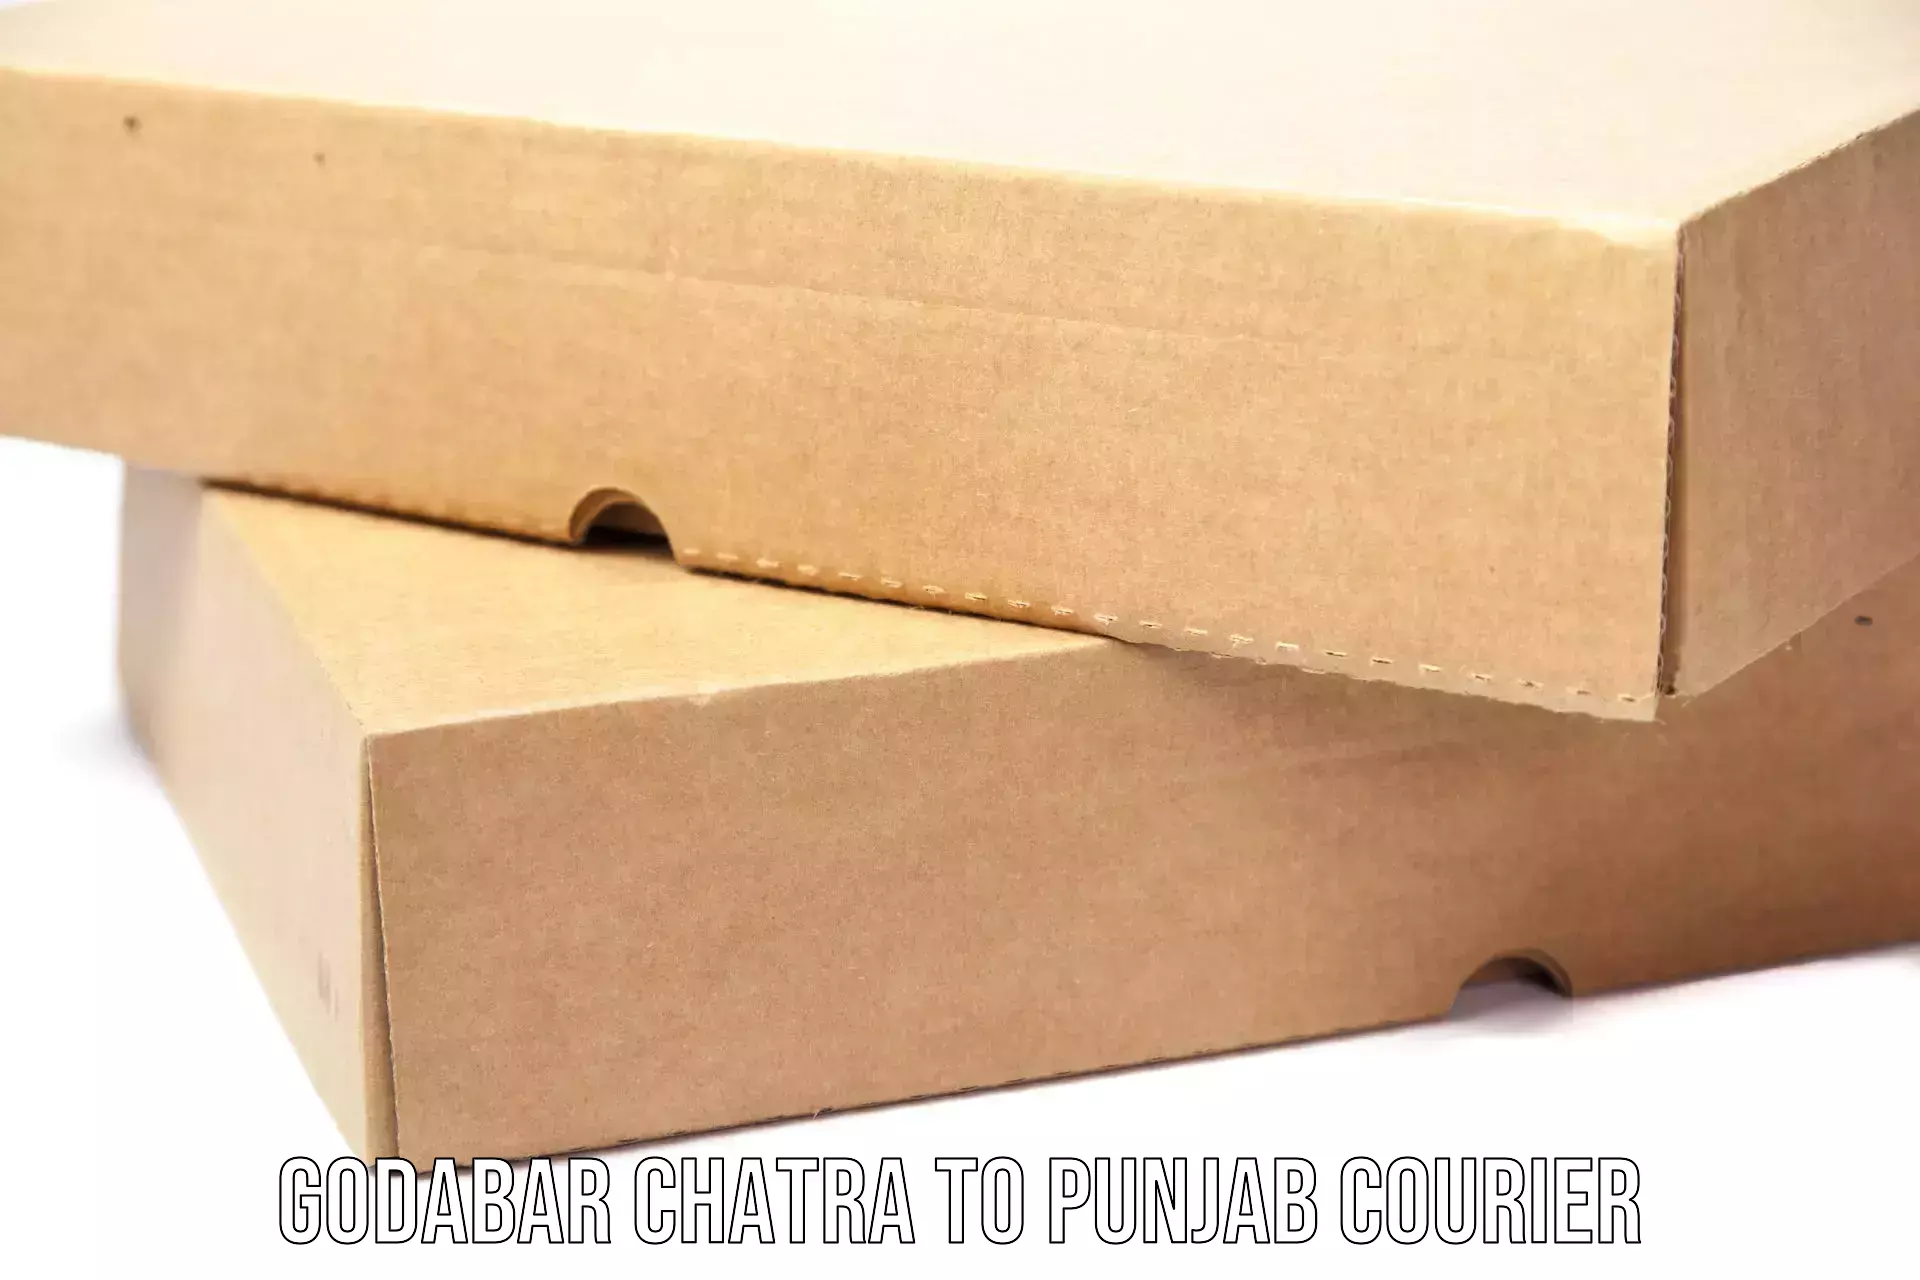 Automated shipping processes Godabar Chatra to Punjab